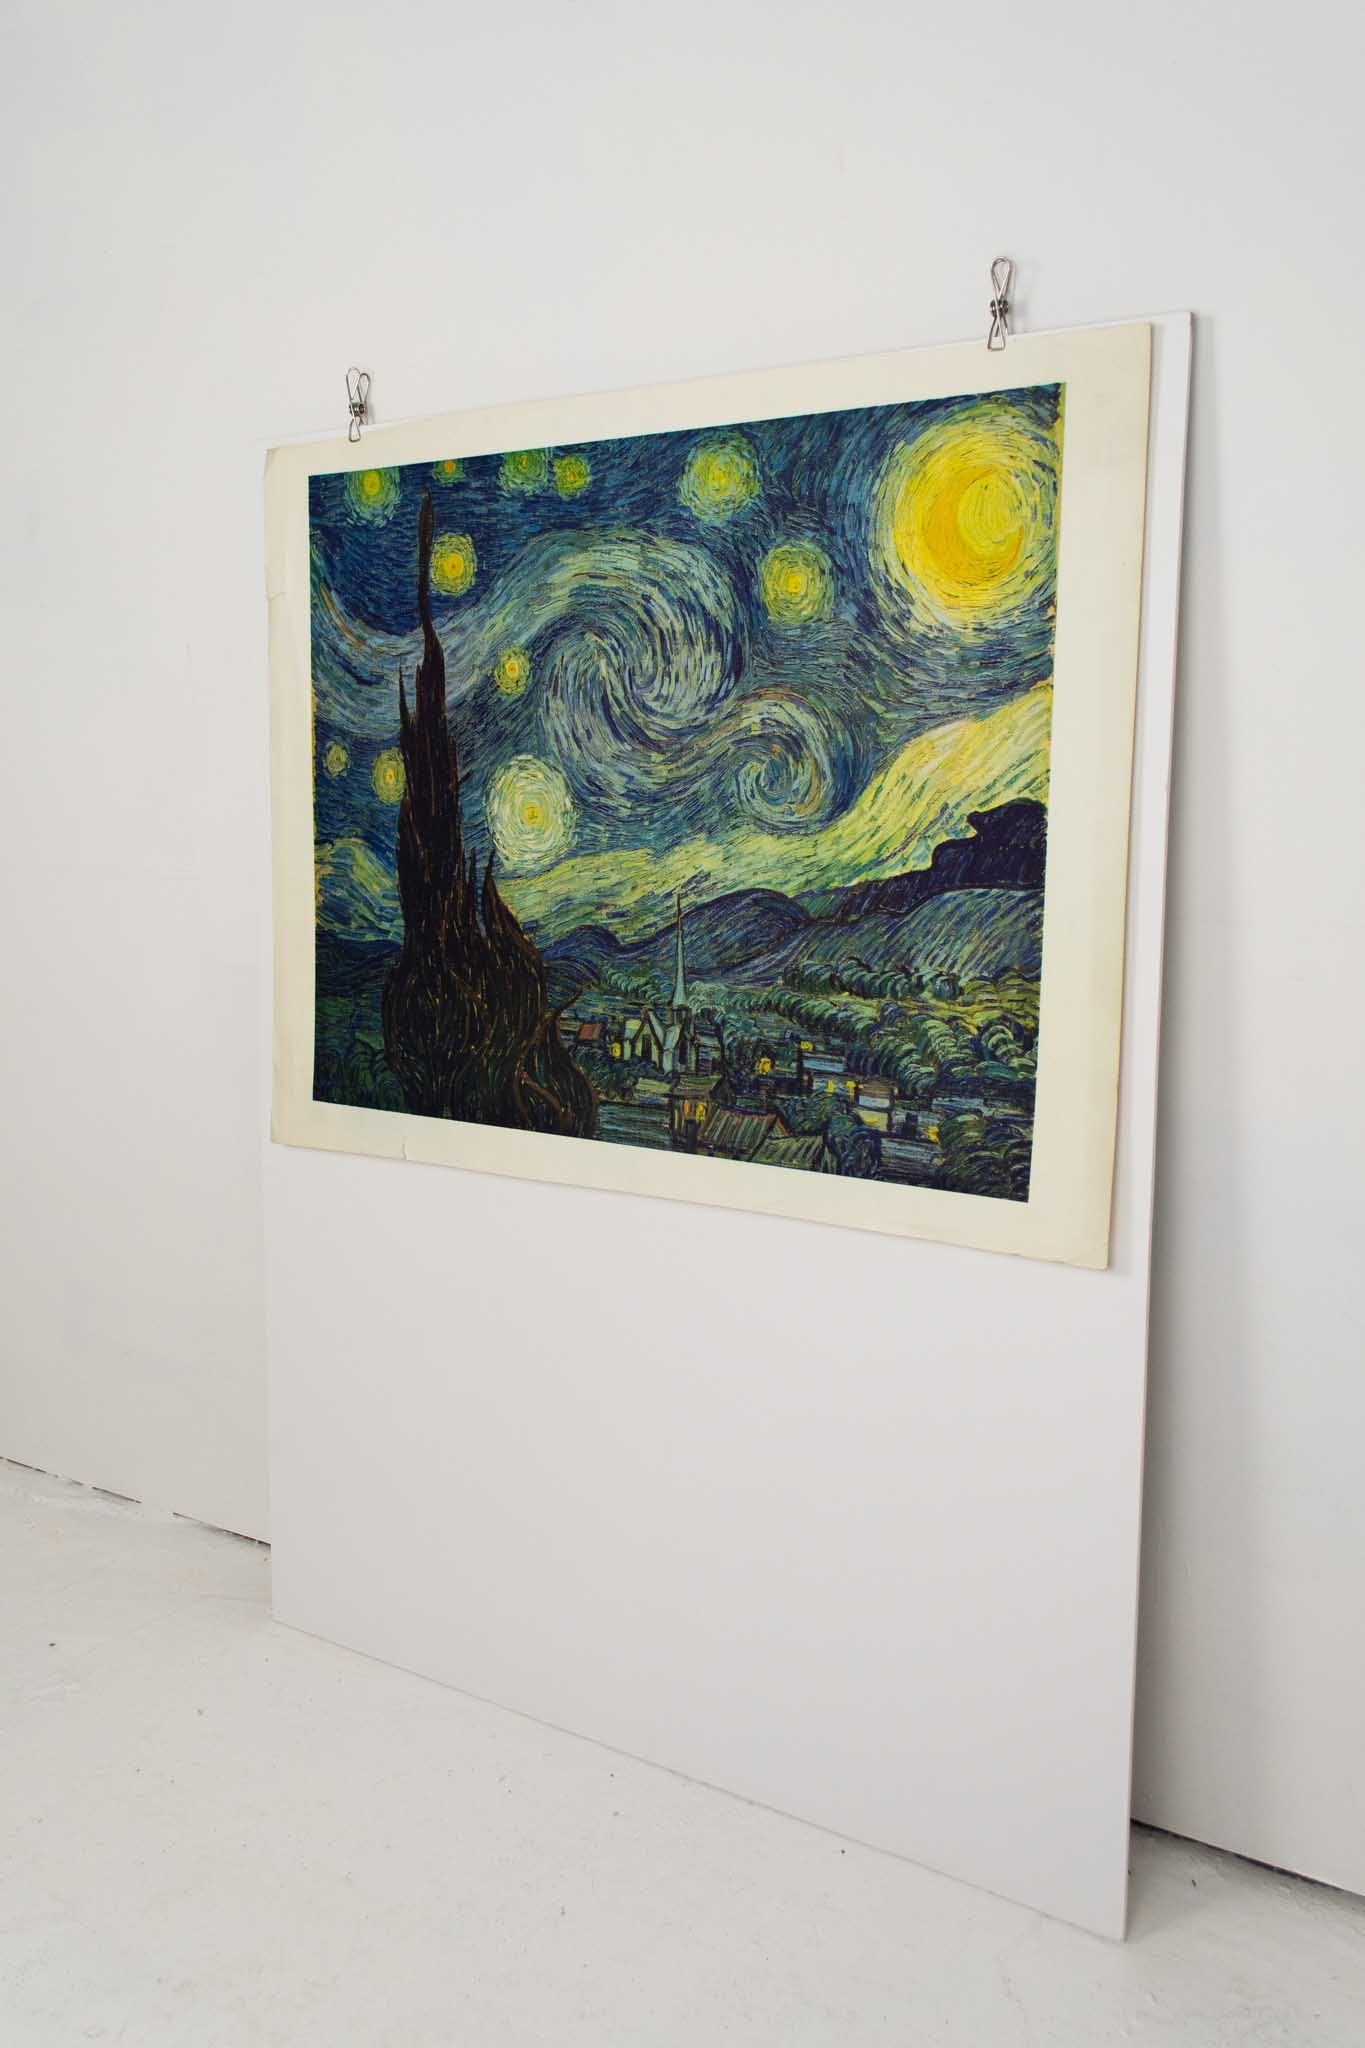 Van Gogh "Starry Night" Print